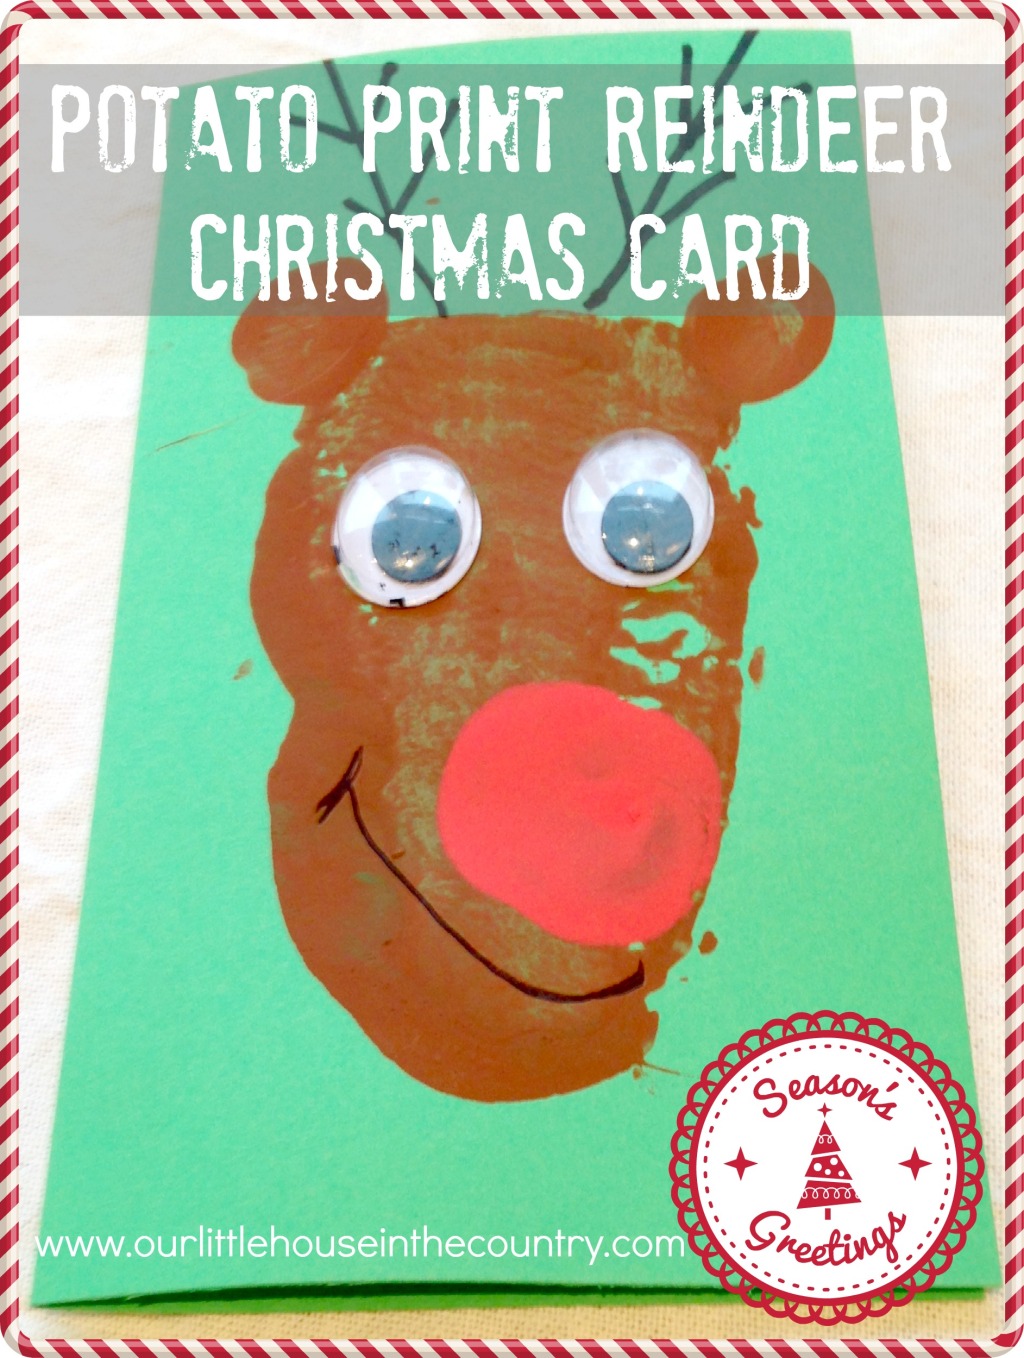 Potato Print Reindeer Christmas Cards